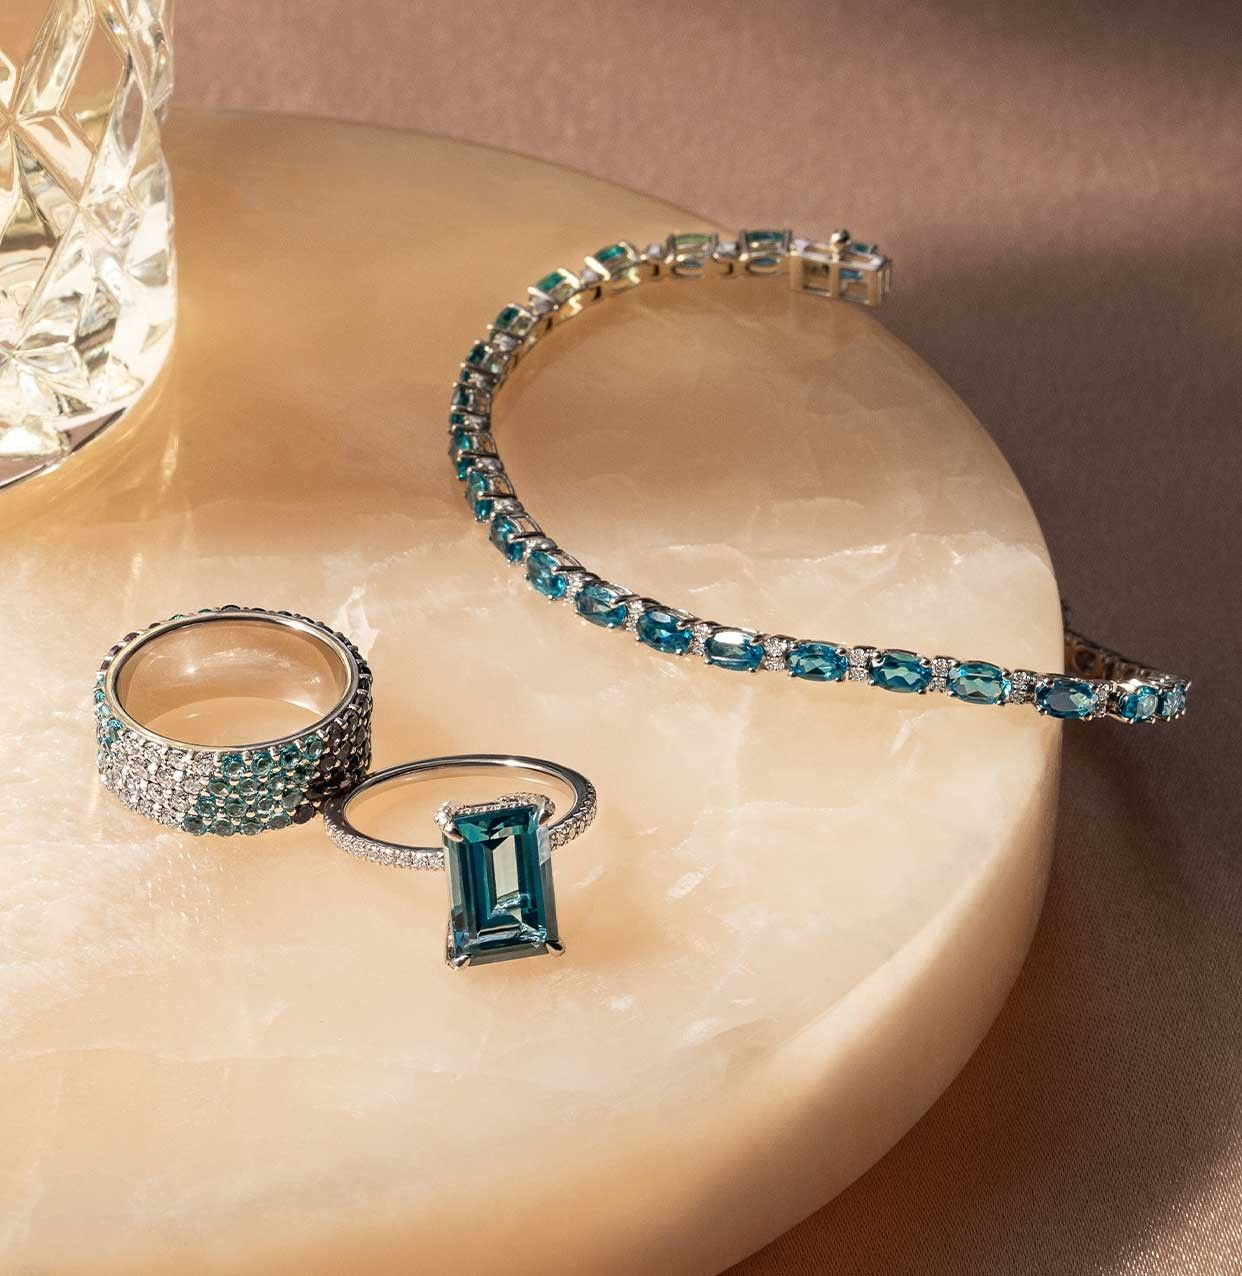 Assortment of gemstone jewelry, featuring gemstone rings, and a gemstone bracelet.